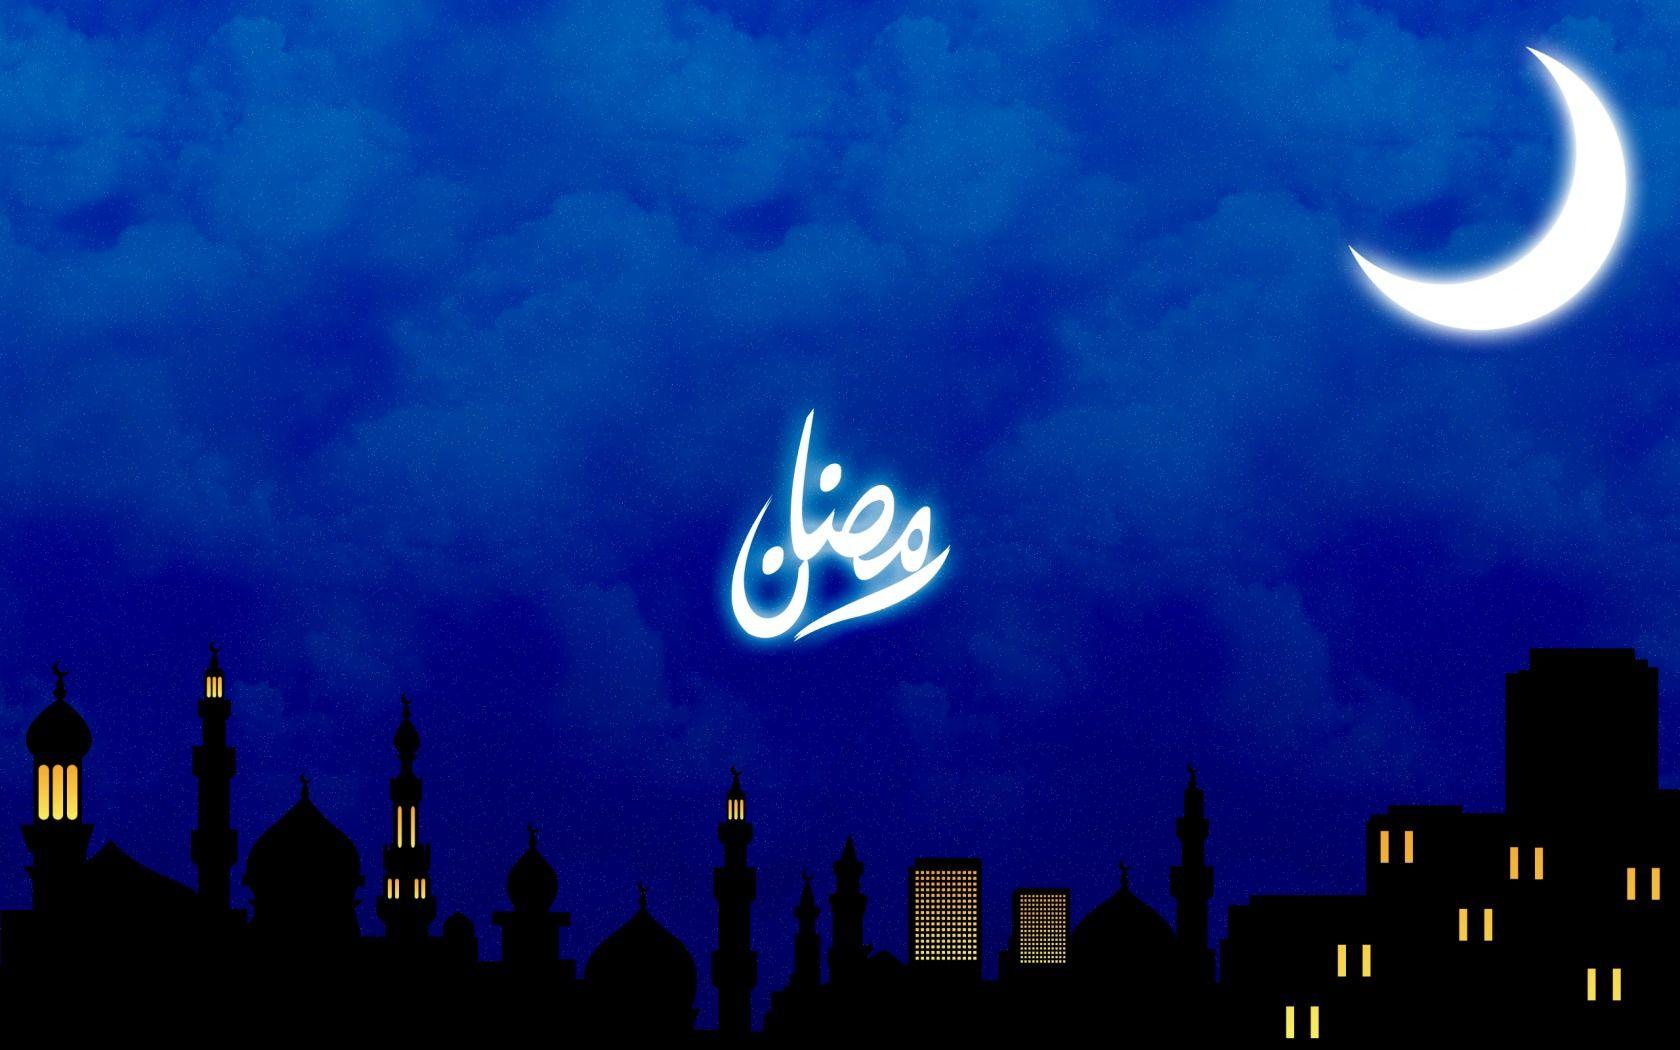 Holy Ramadan Kareem Desktop Wallpaper